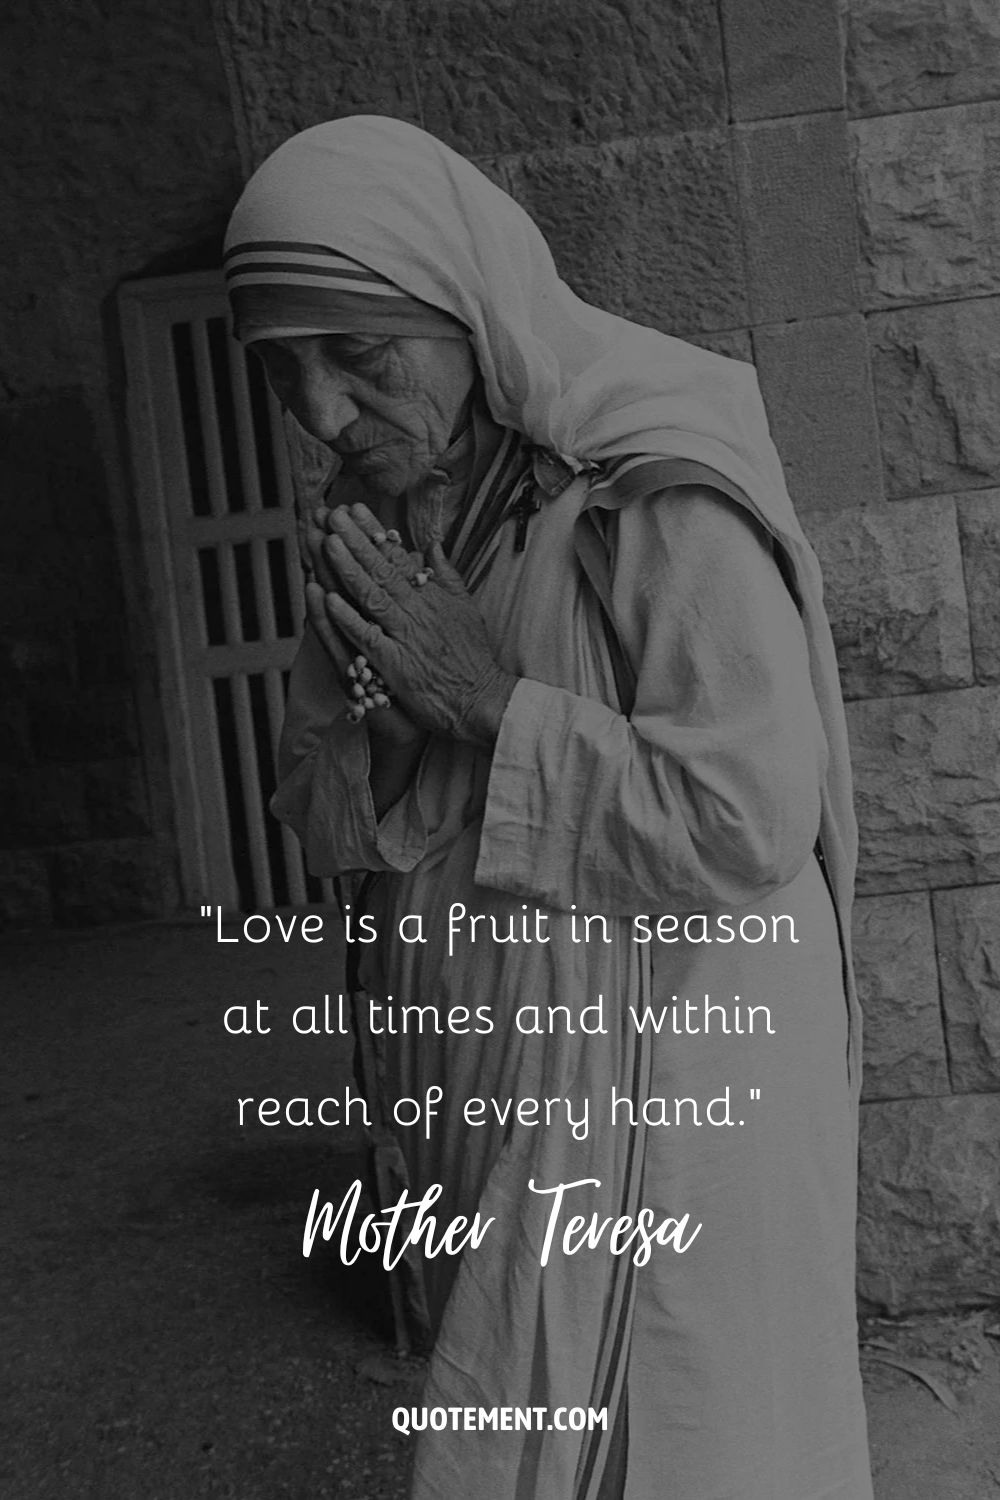 Mother Teresa standing in a prayer
